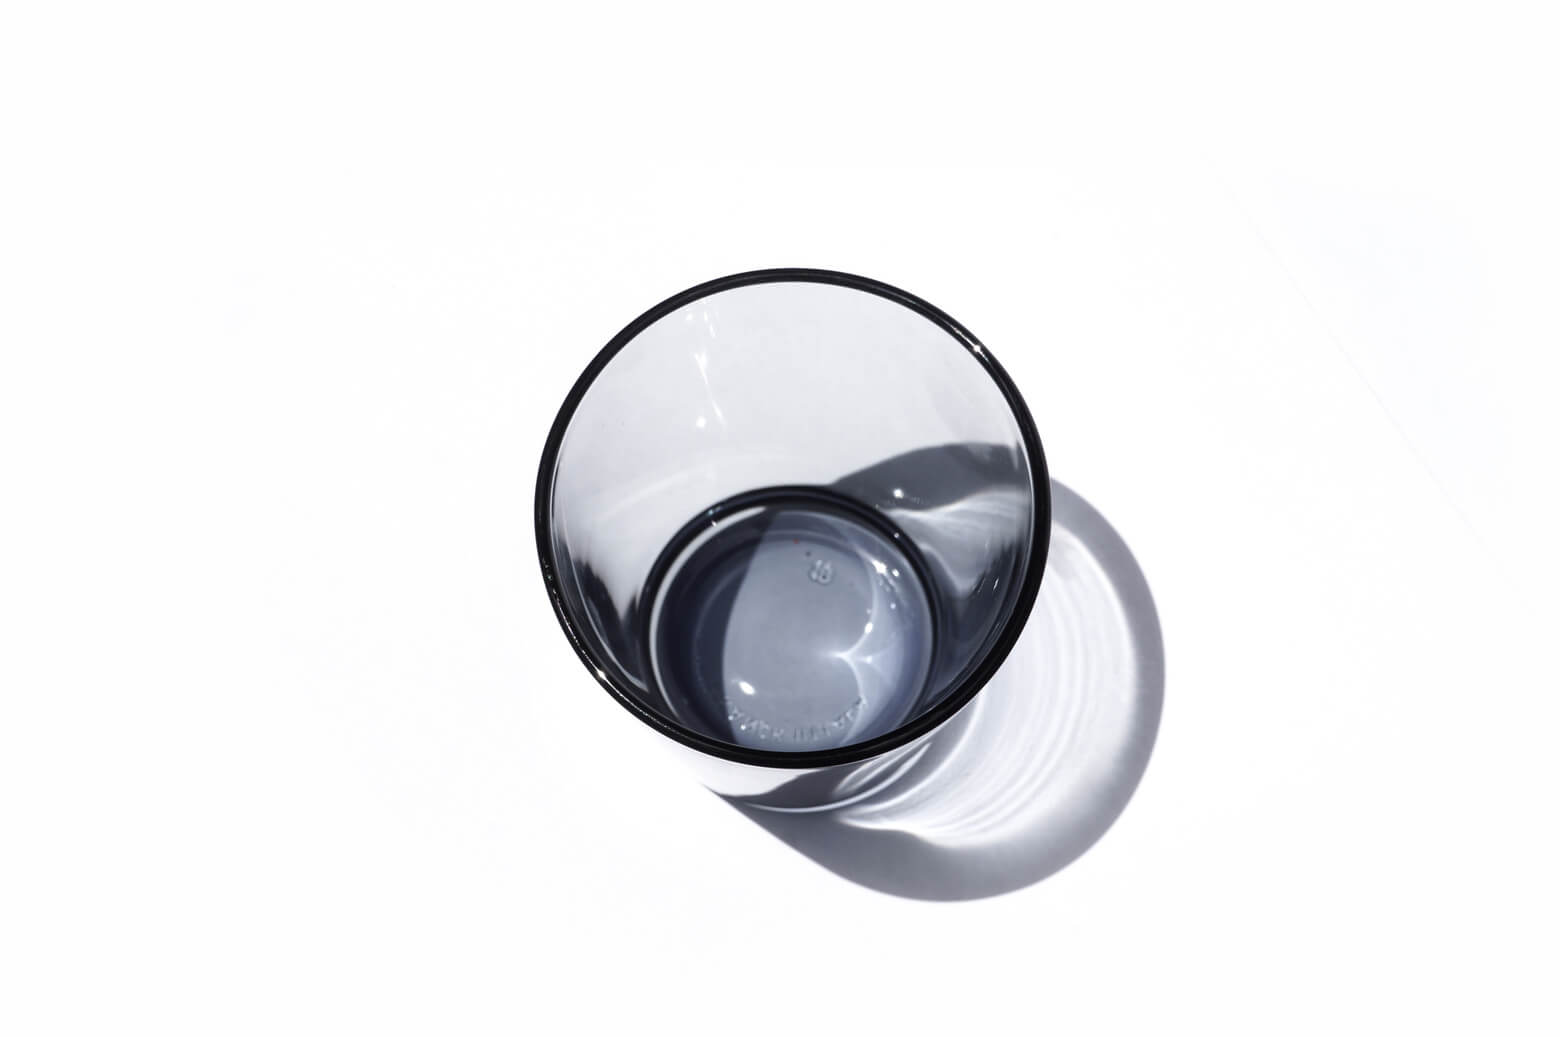 Iittala Kartio Gray Tumbler Glass / イッタラ カルティオ グレー タンブラー グラス 北欧食器